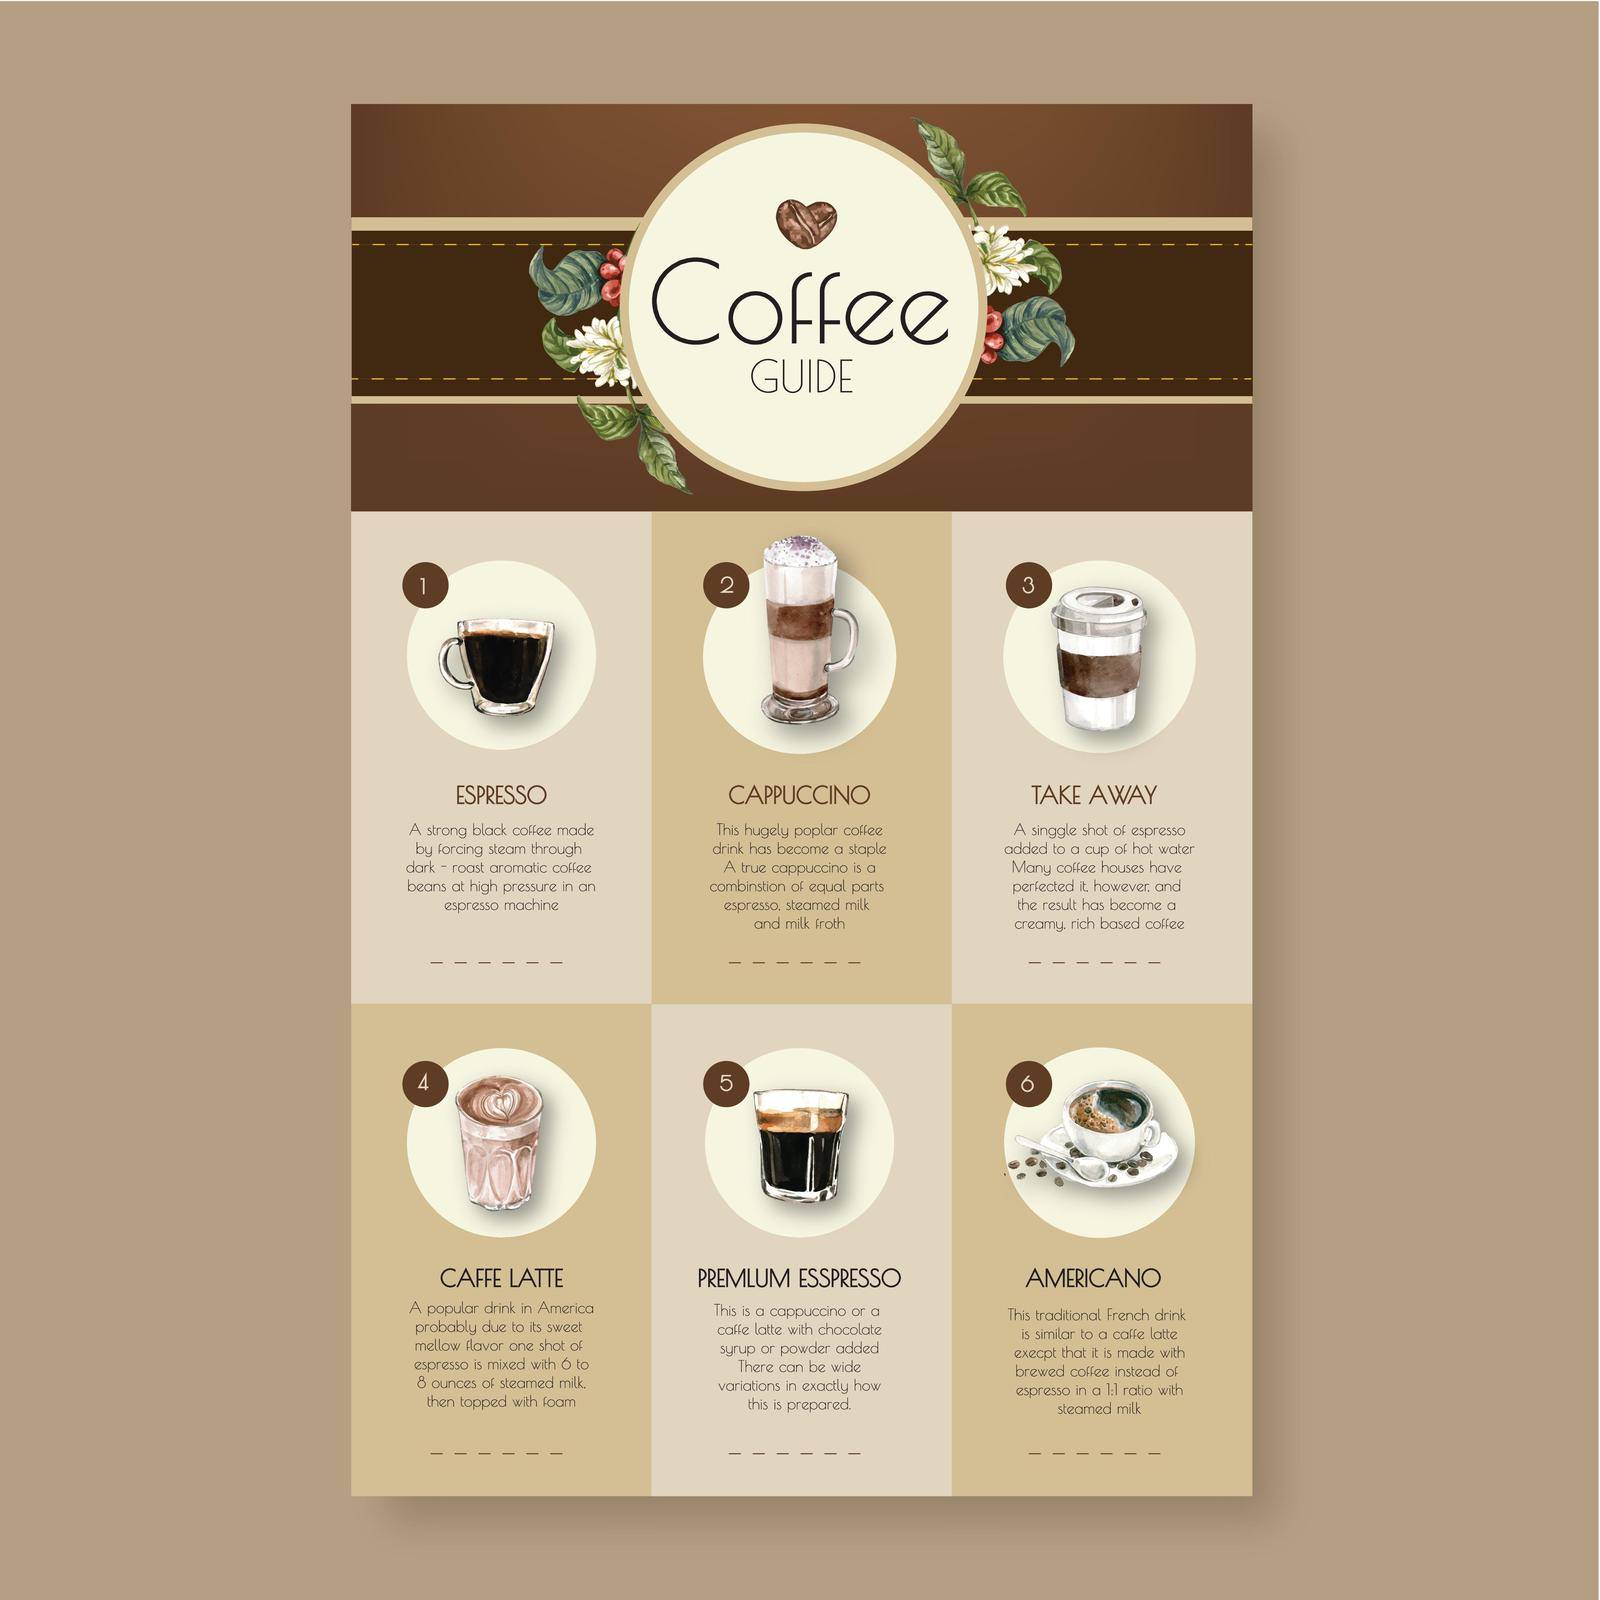 coffee cup type, americano, cappuccino, espresso menu, infographic watercolor illustration by Photographeeasia